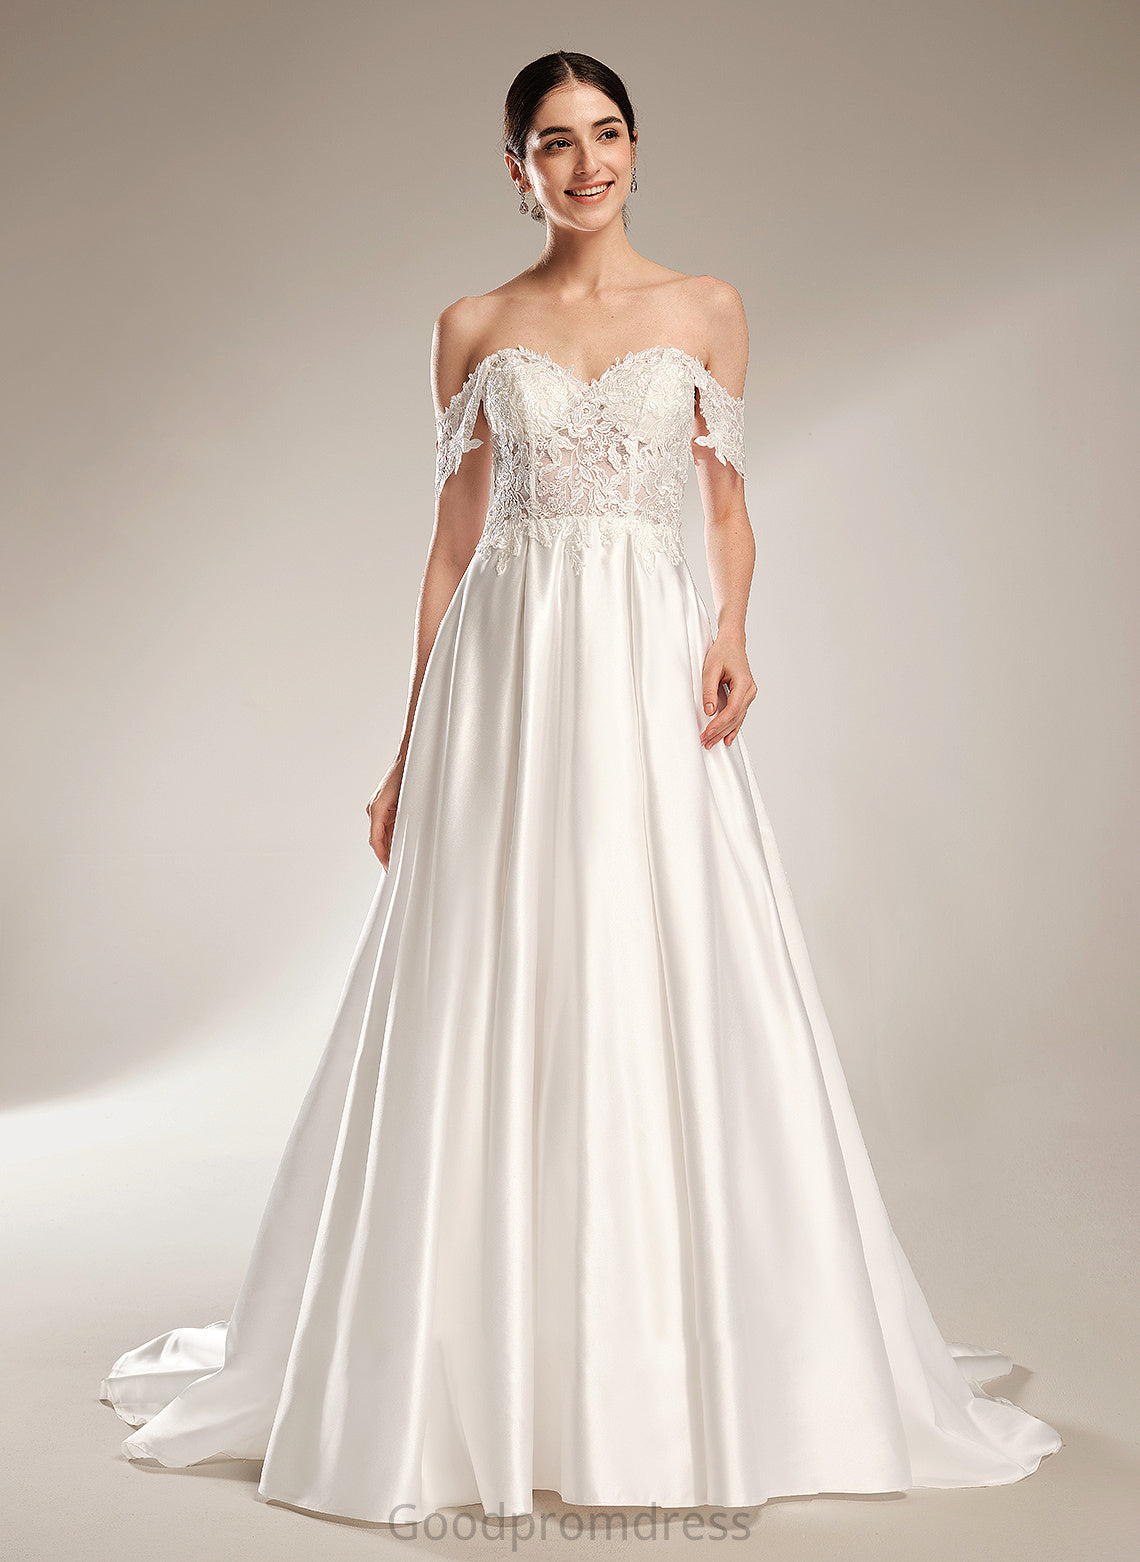 Dress Sweetheart Francesca Chapel Train Wedding Dresses With Wedding Sequins Ball-Gown/Princess